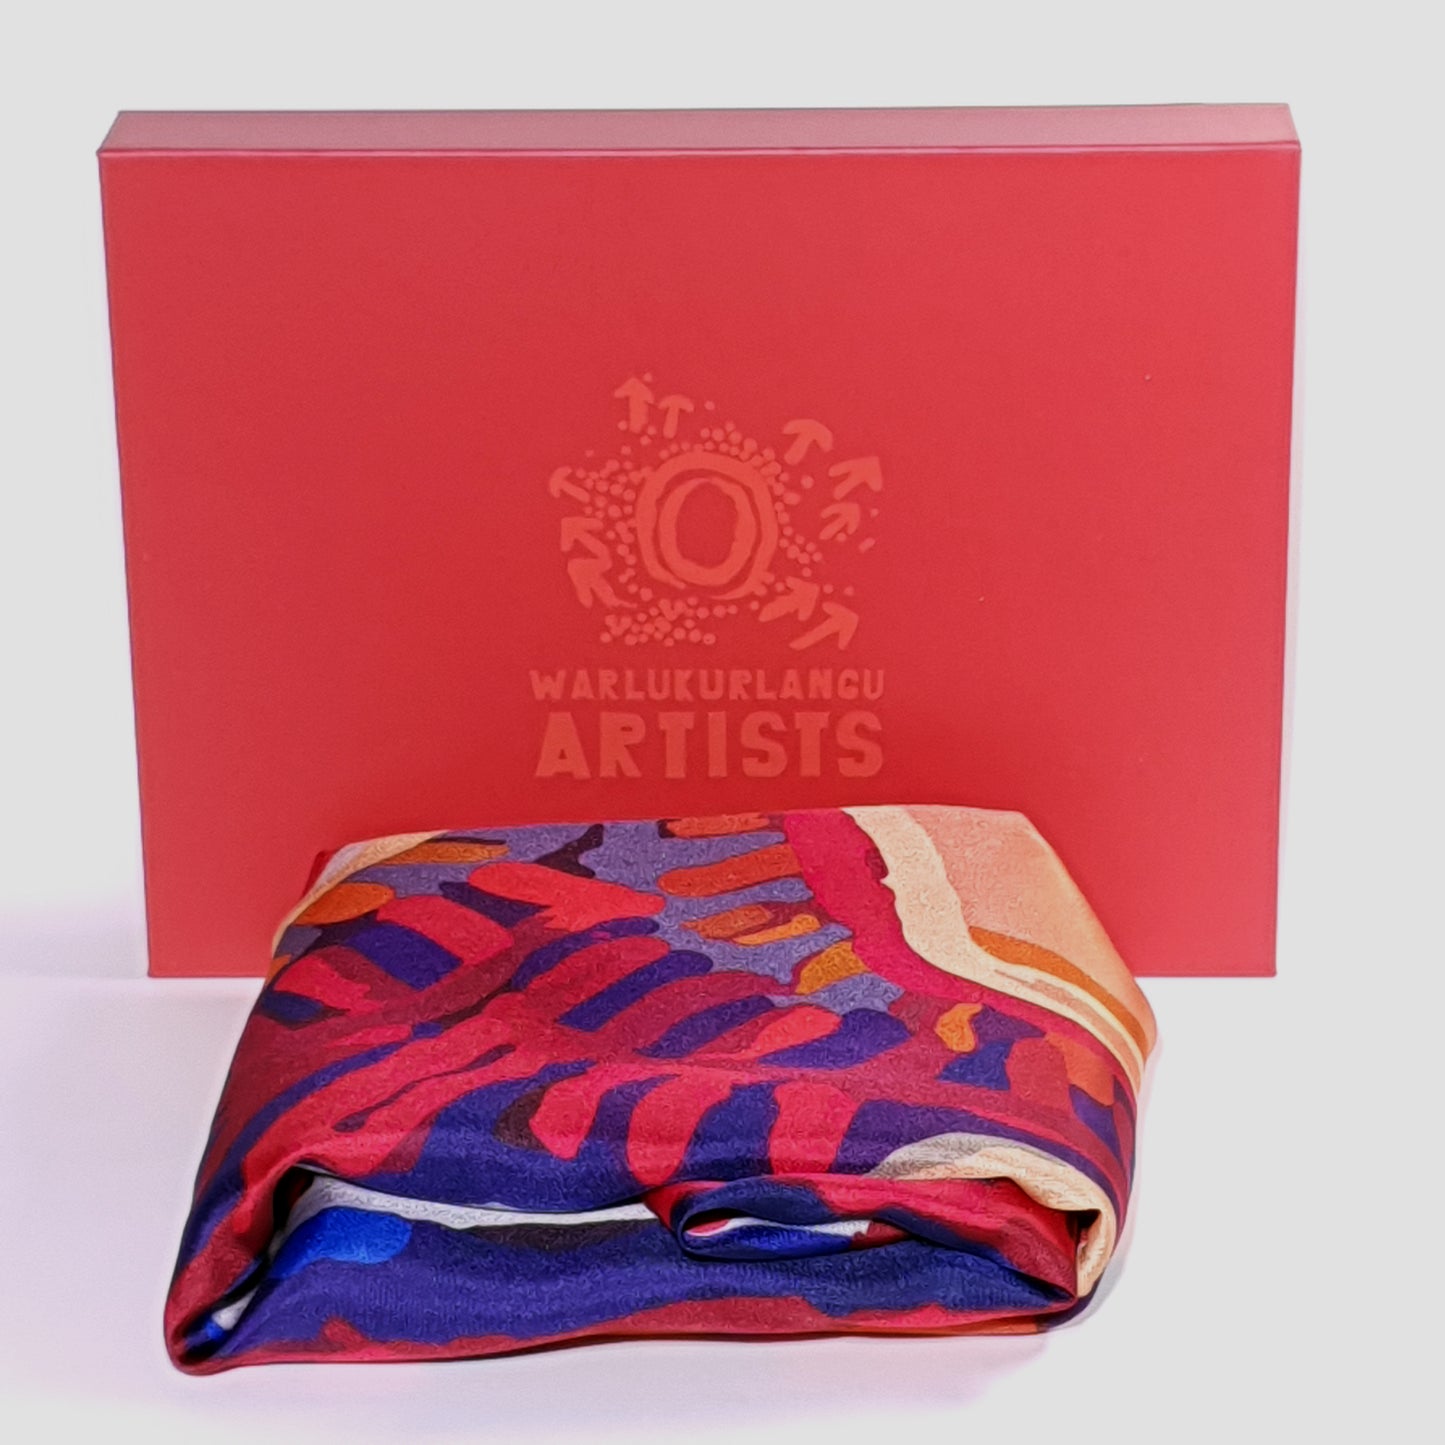 Silk scarf featuring Murdie Nampijinpa Morris artwork